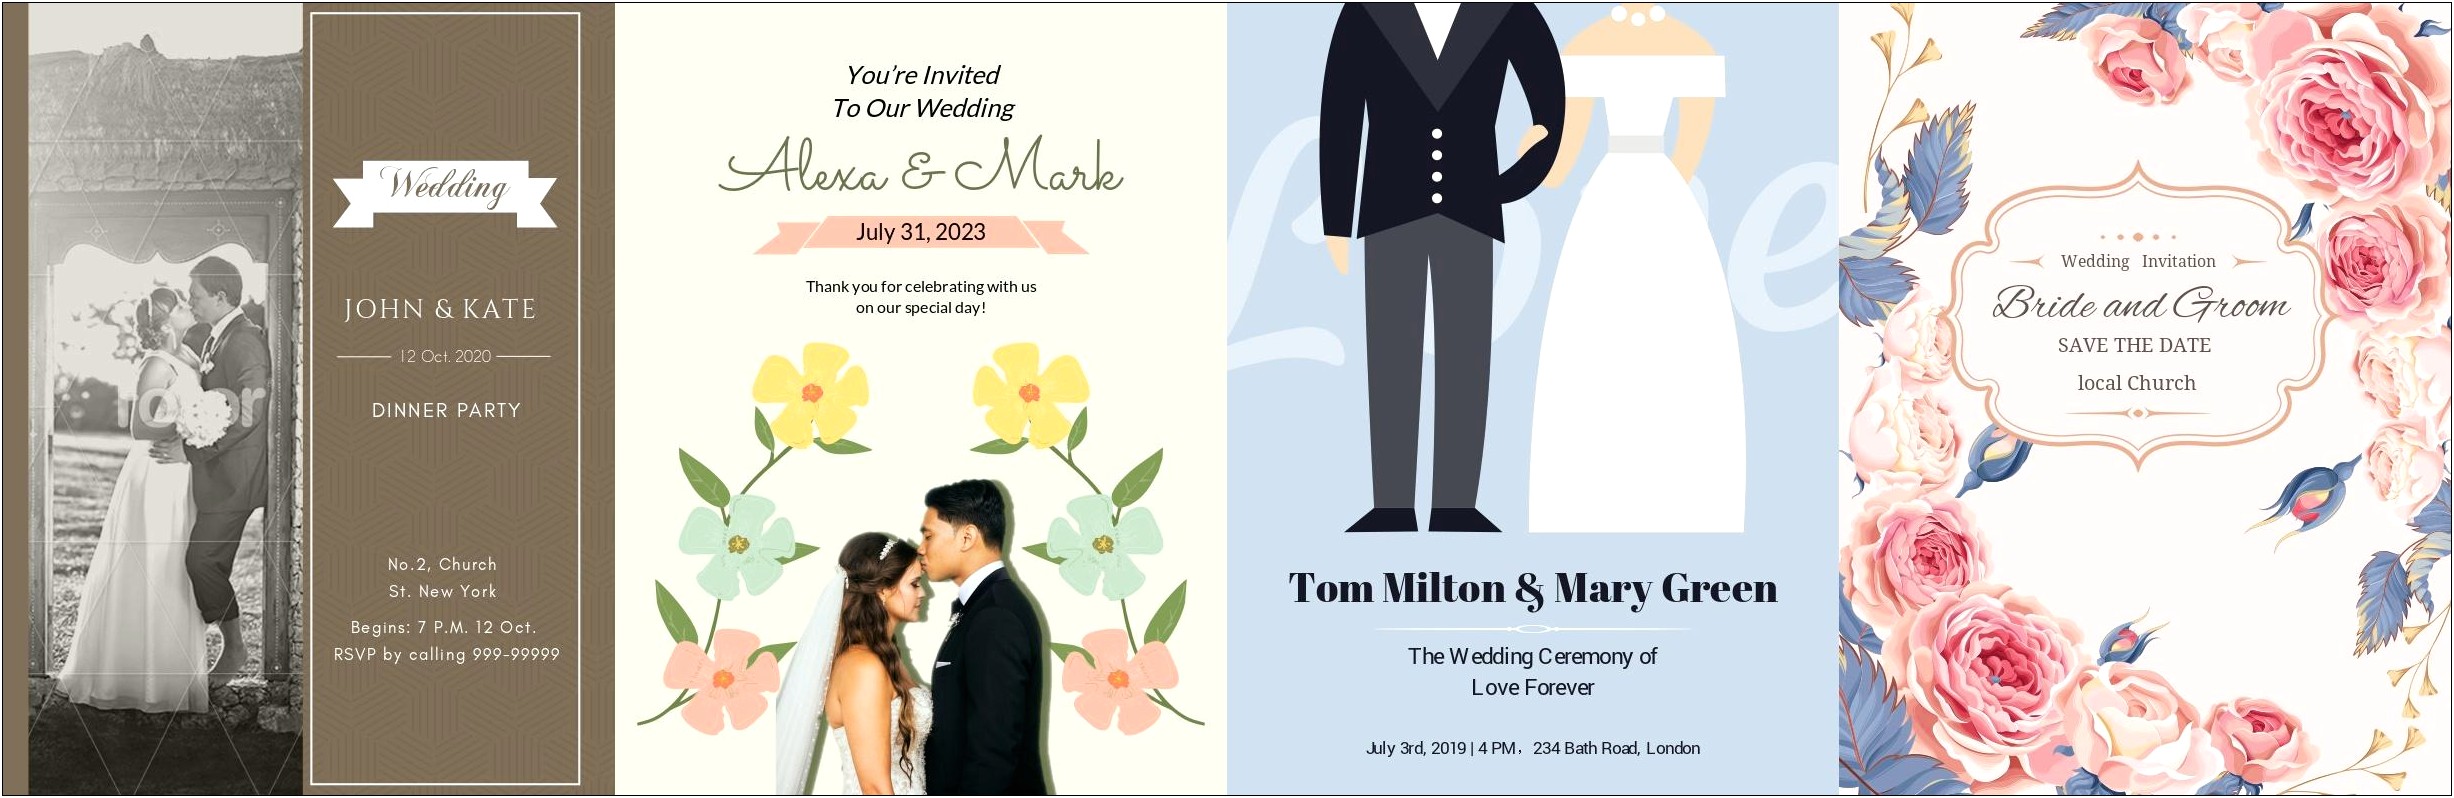 Wedding Invitation Card Template Online Free